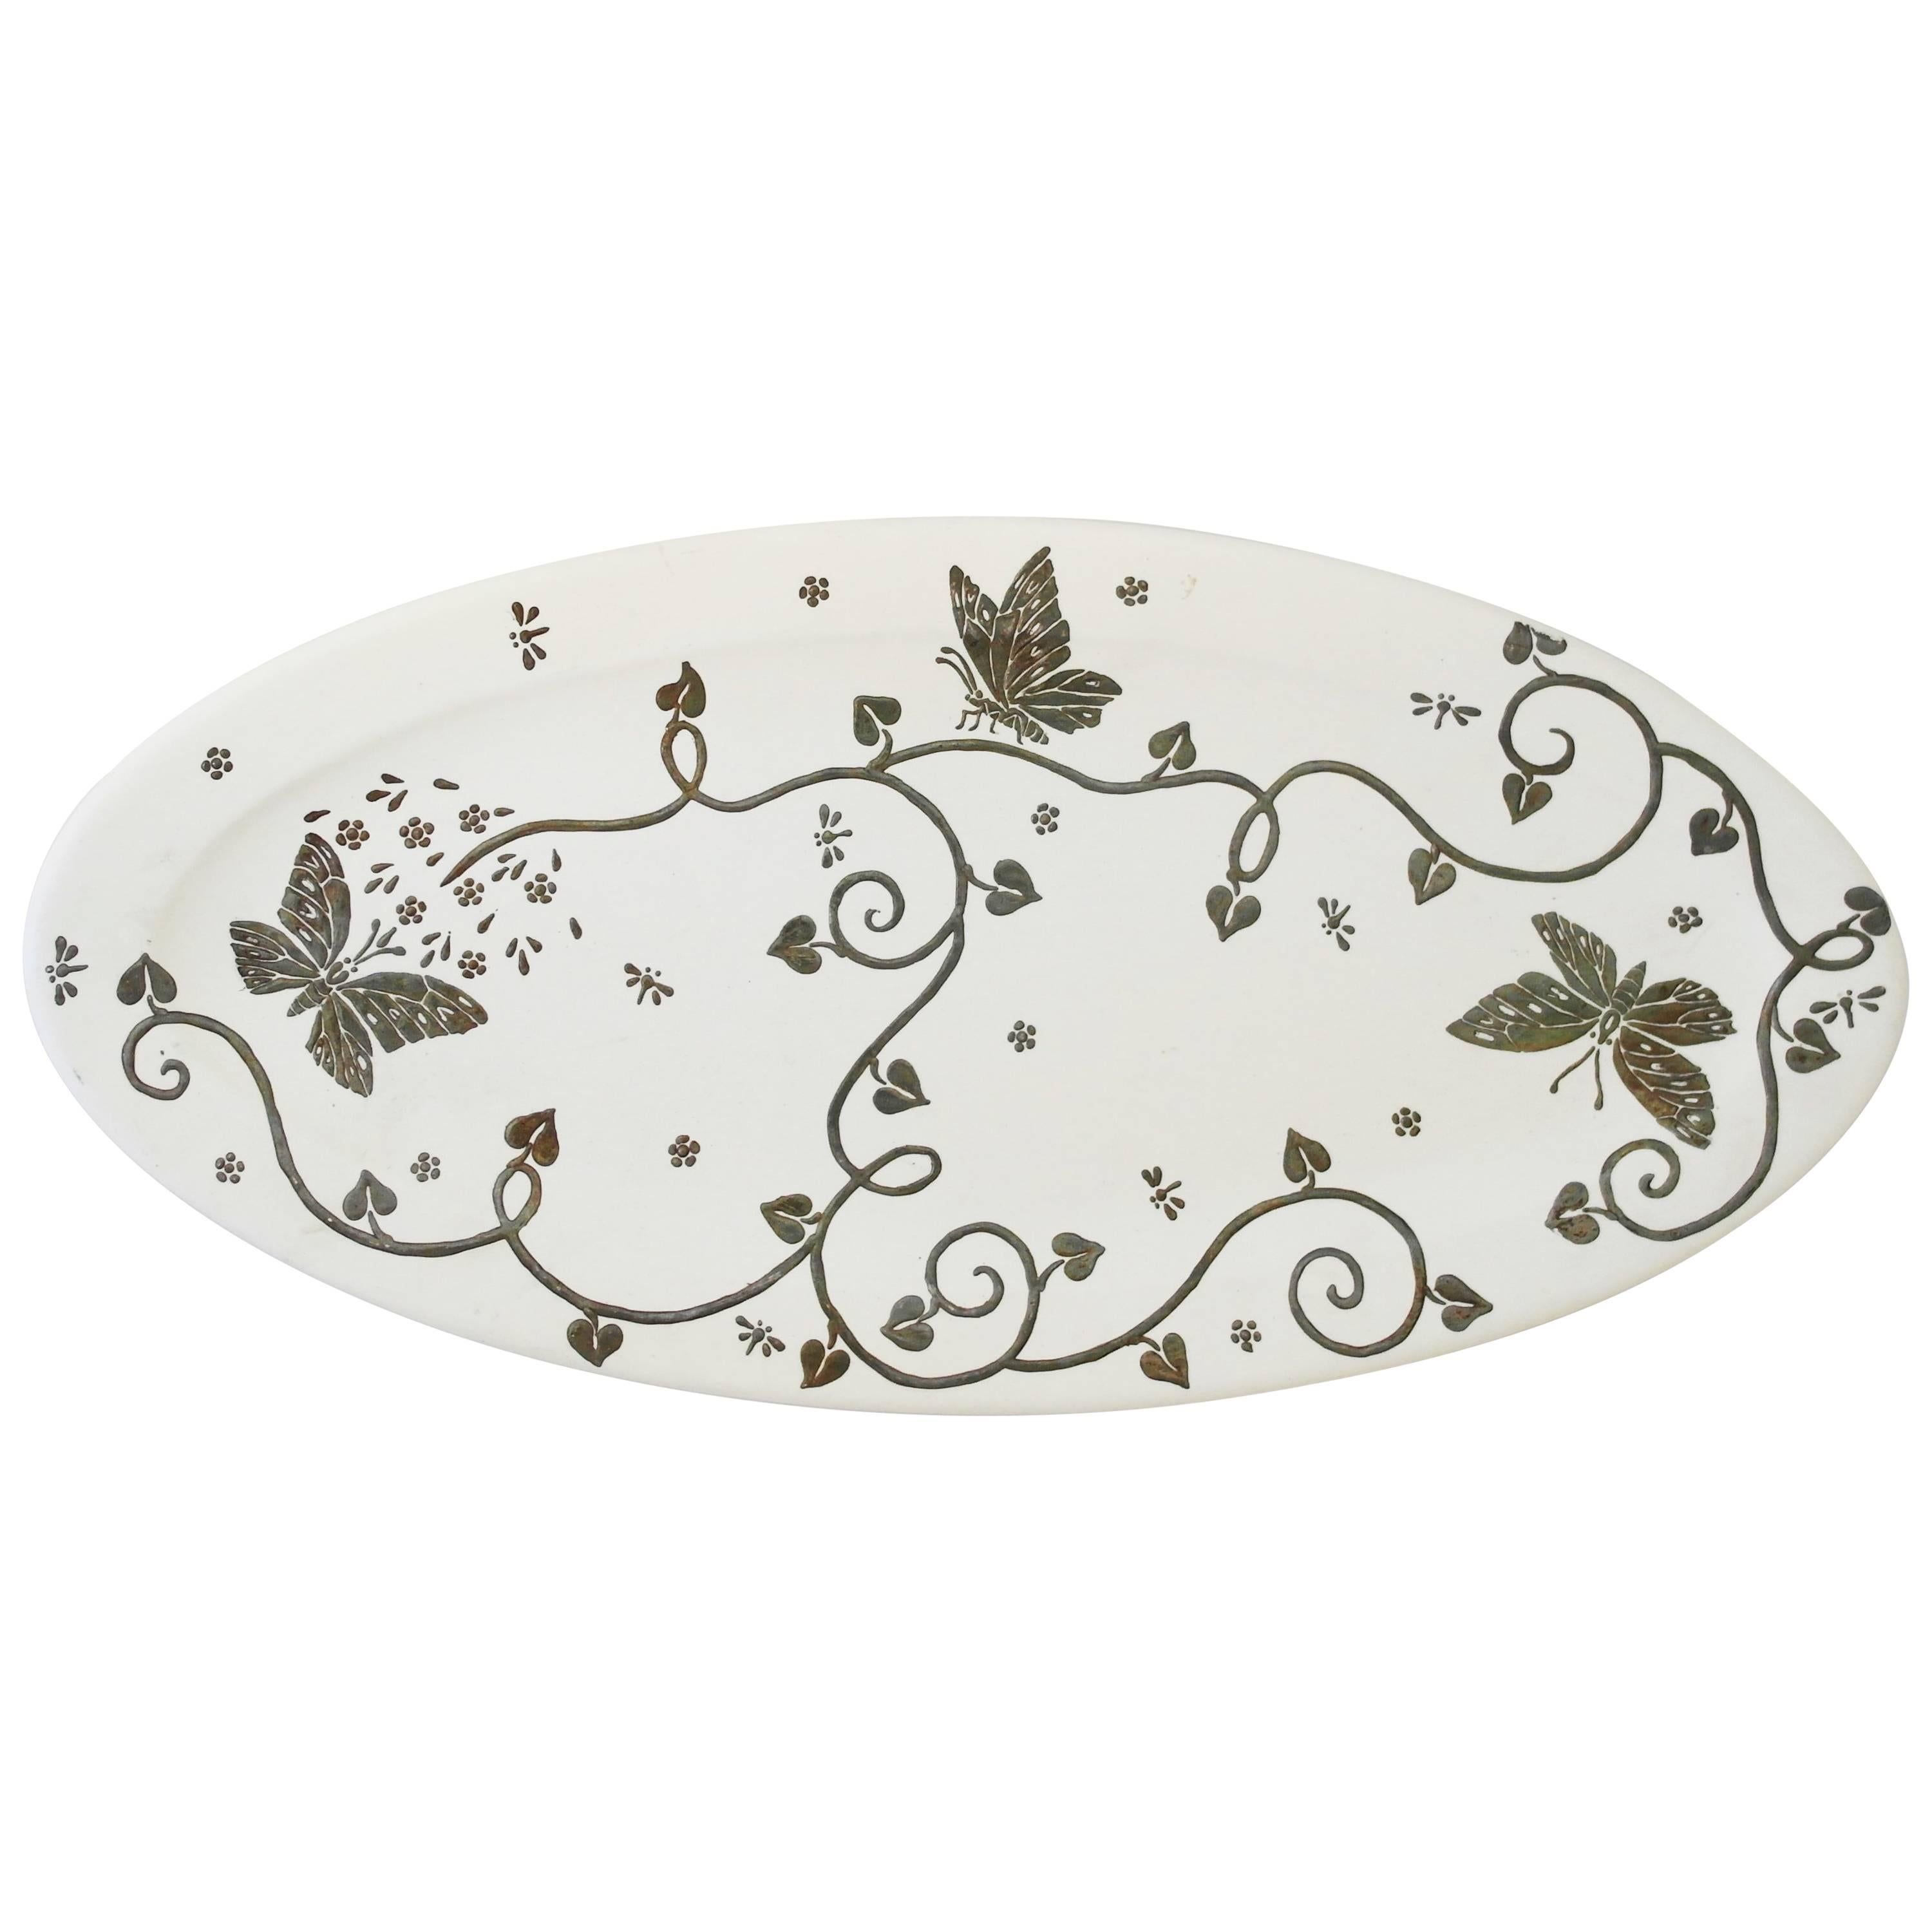 Emilia Castillo Ceramic Plate with Sterling Silver Overlay